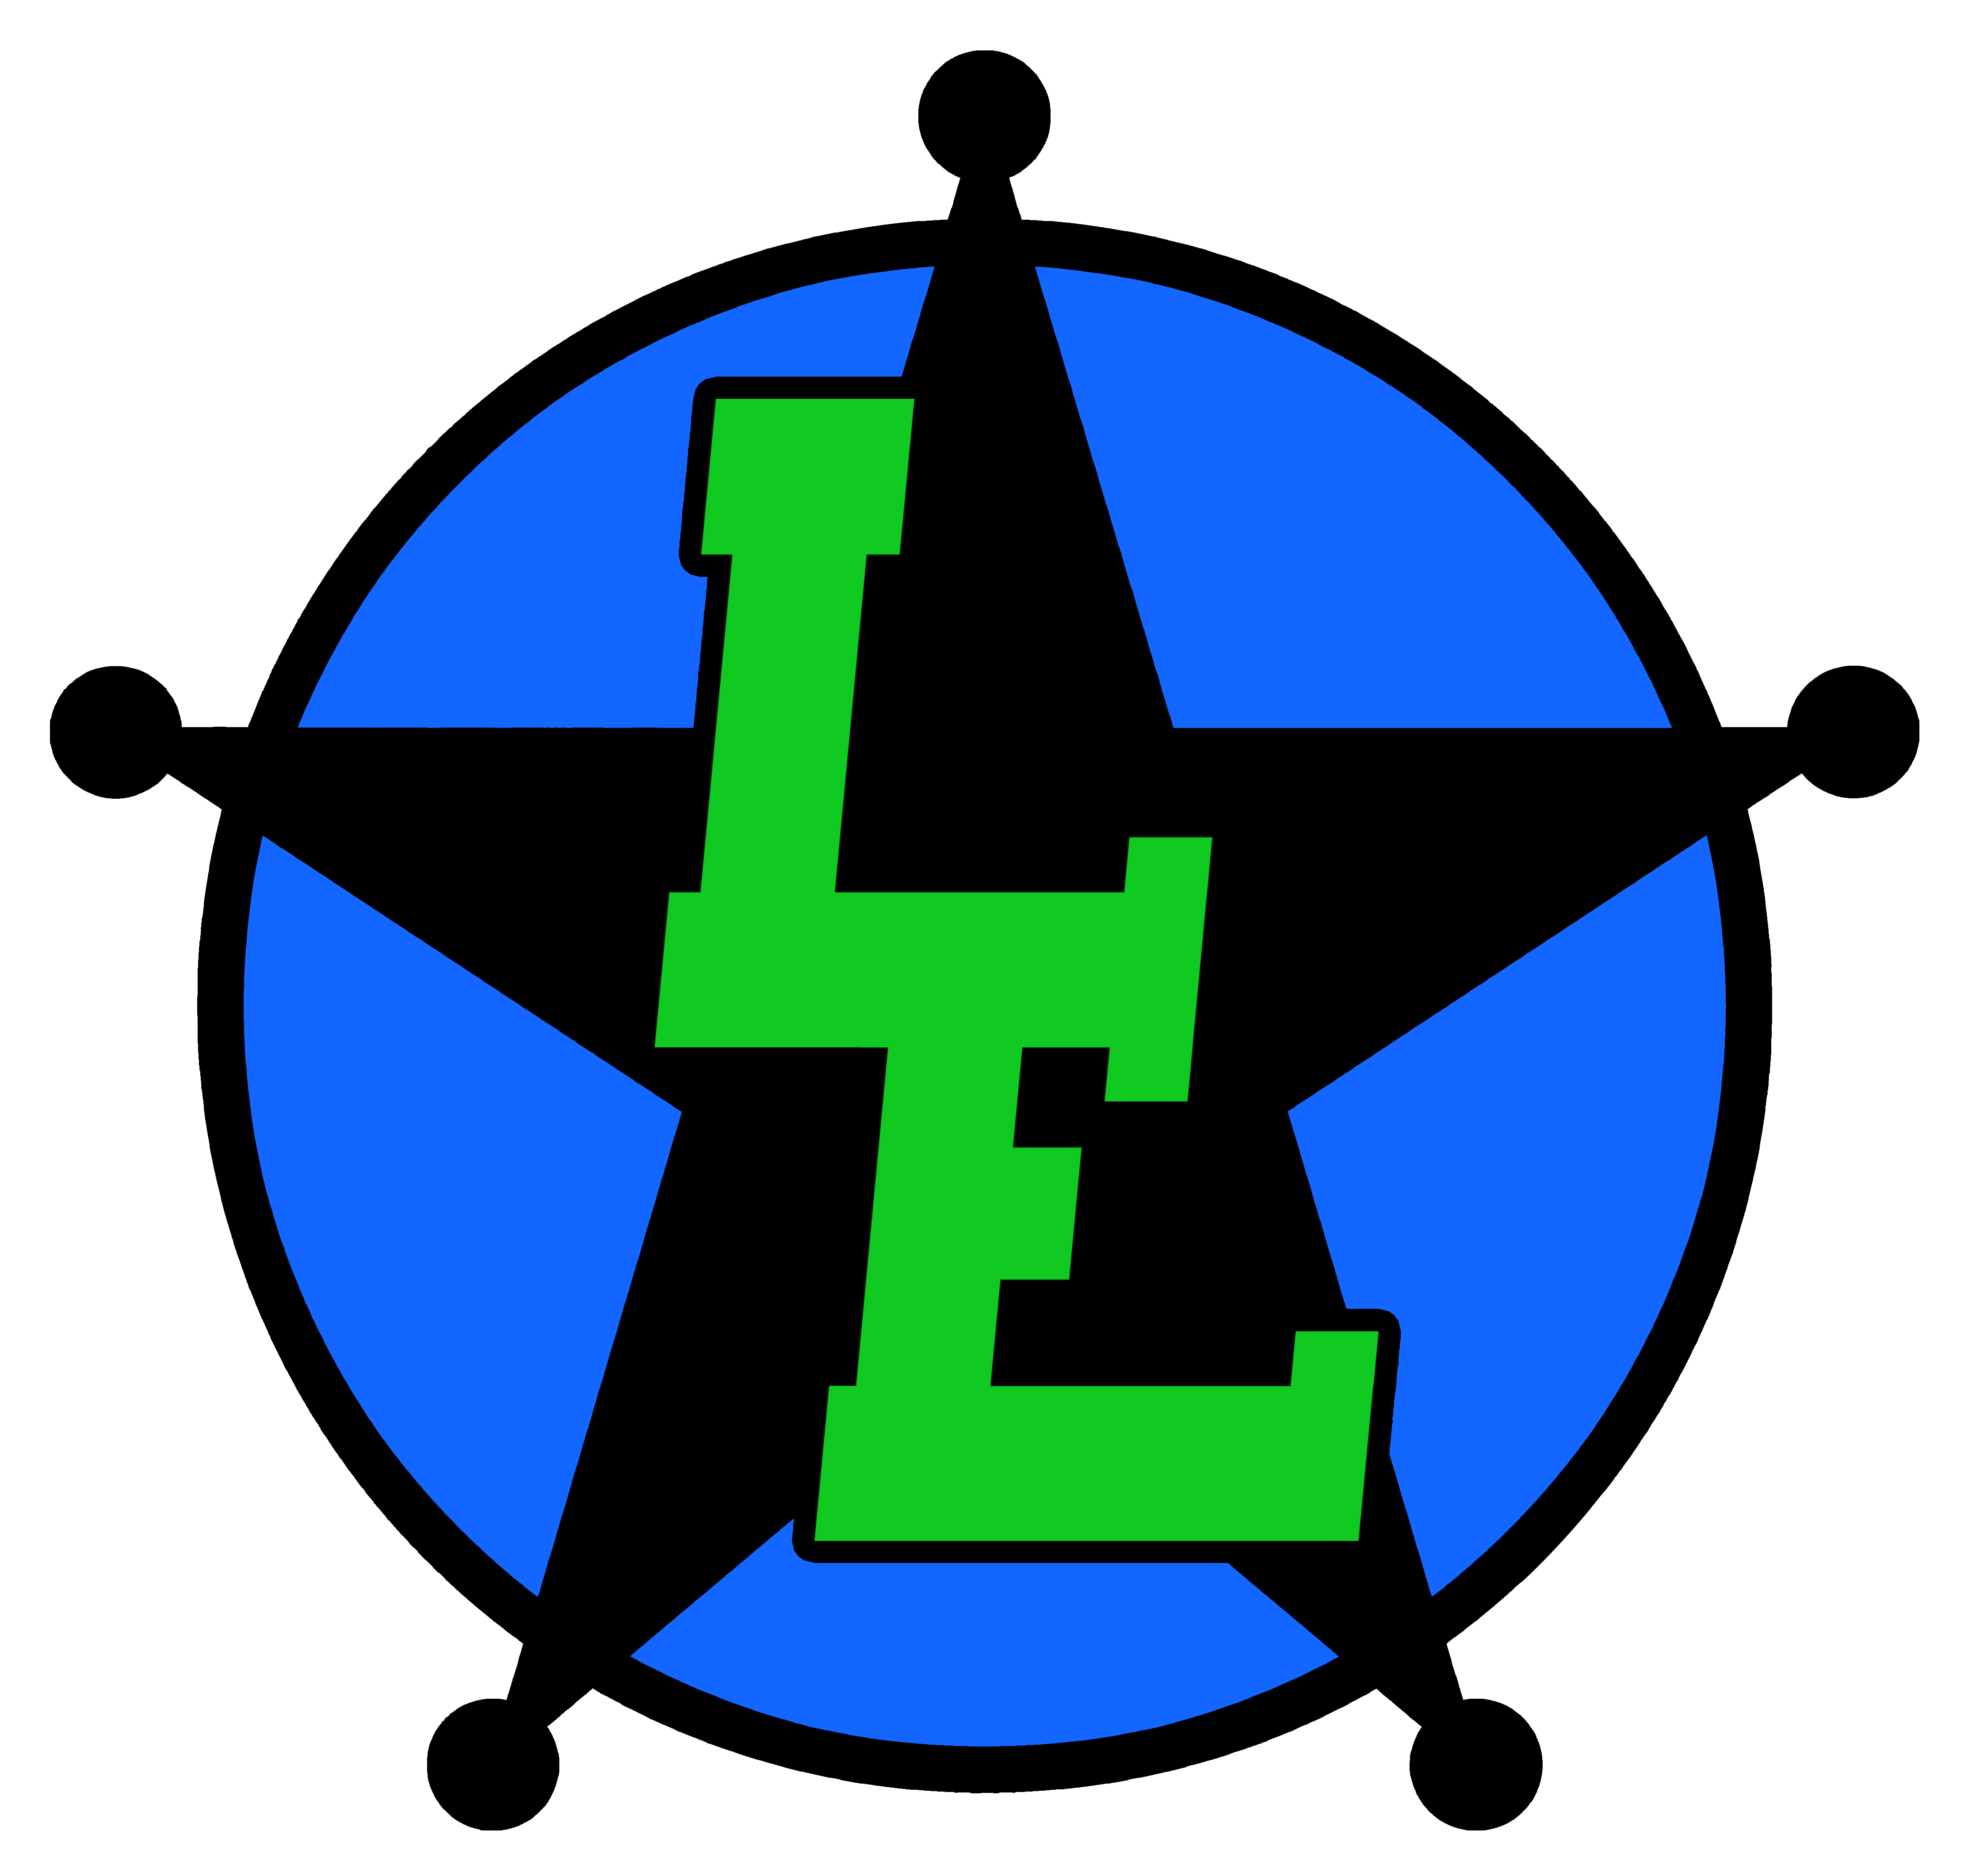 Lawn Enforcement Landscaping Ltd's logo